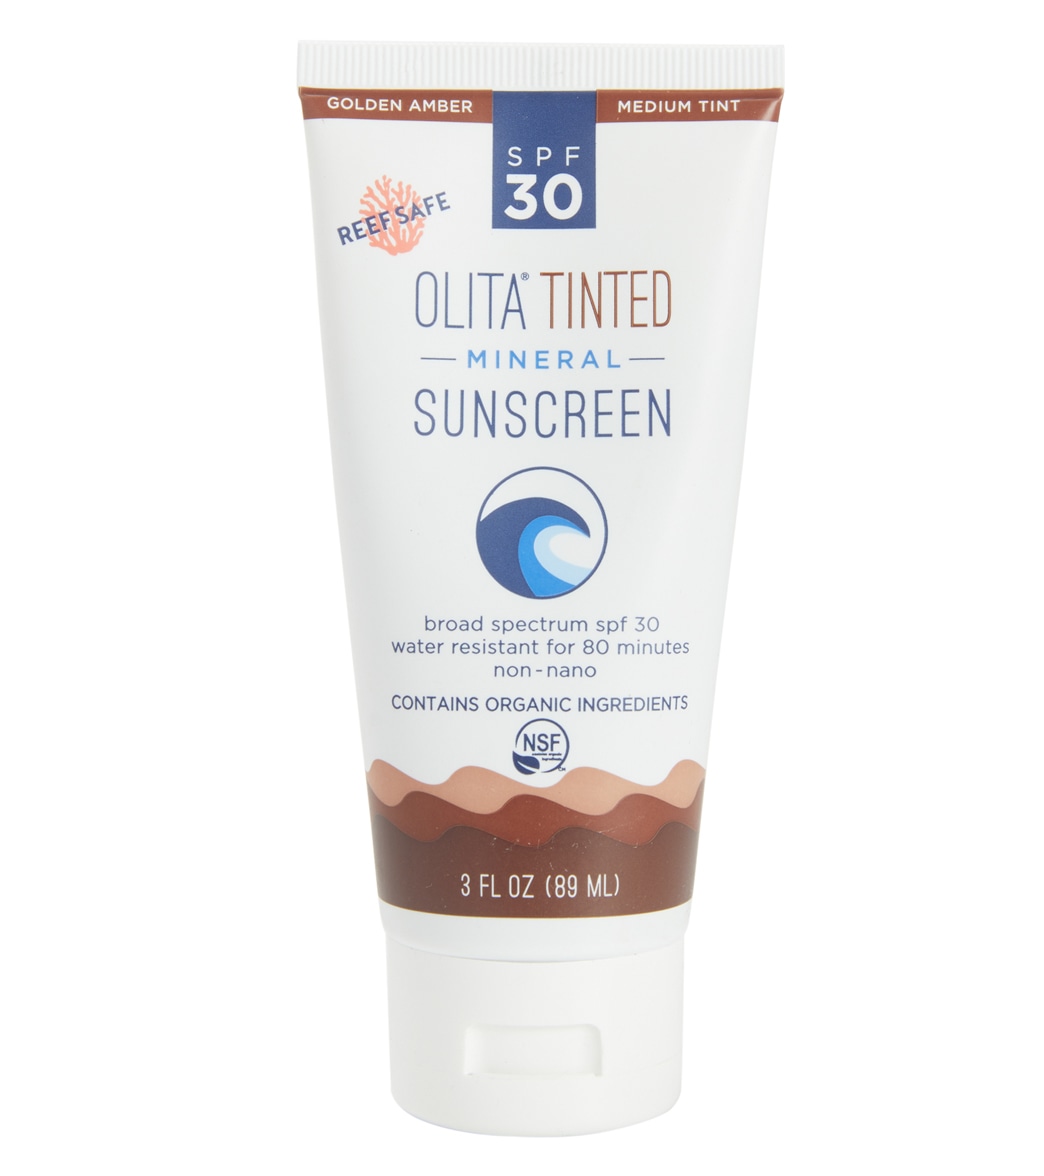 Olita Tinted Spf 30 Mineral Sunscreen - Golden Amber 3 Oz. - Swimoutlet.com